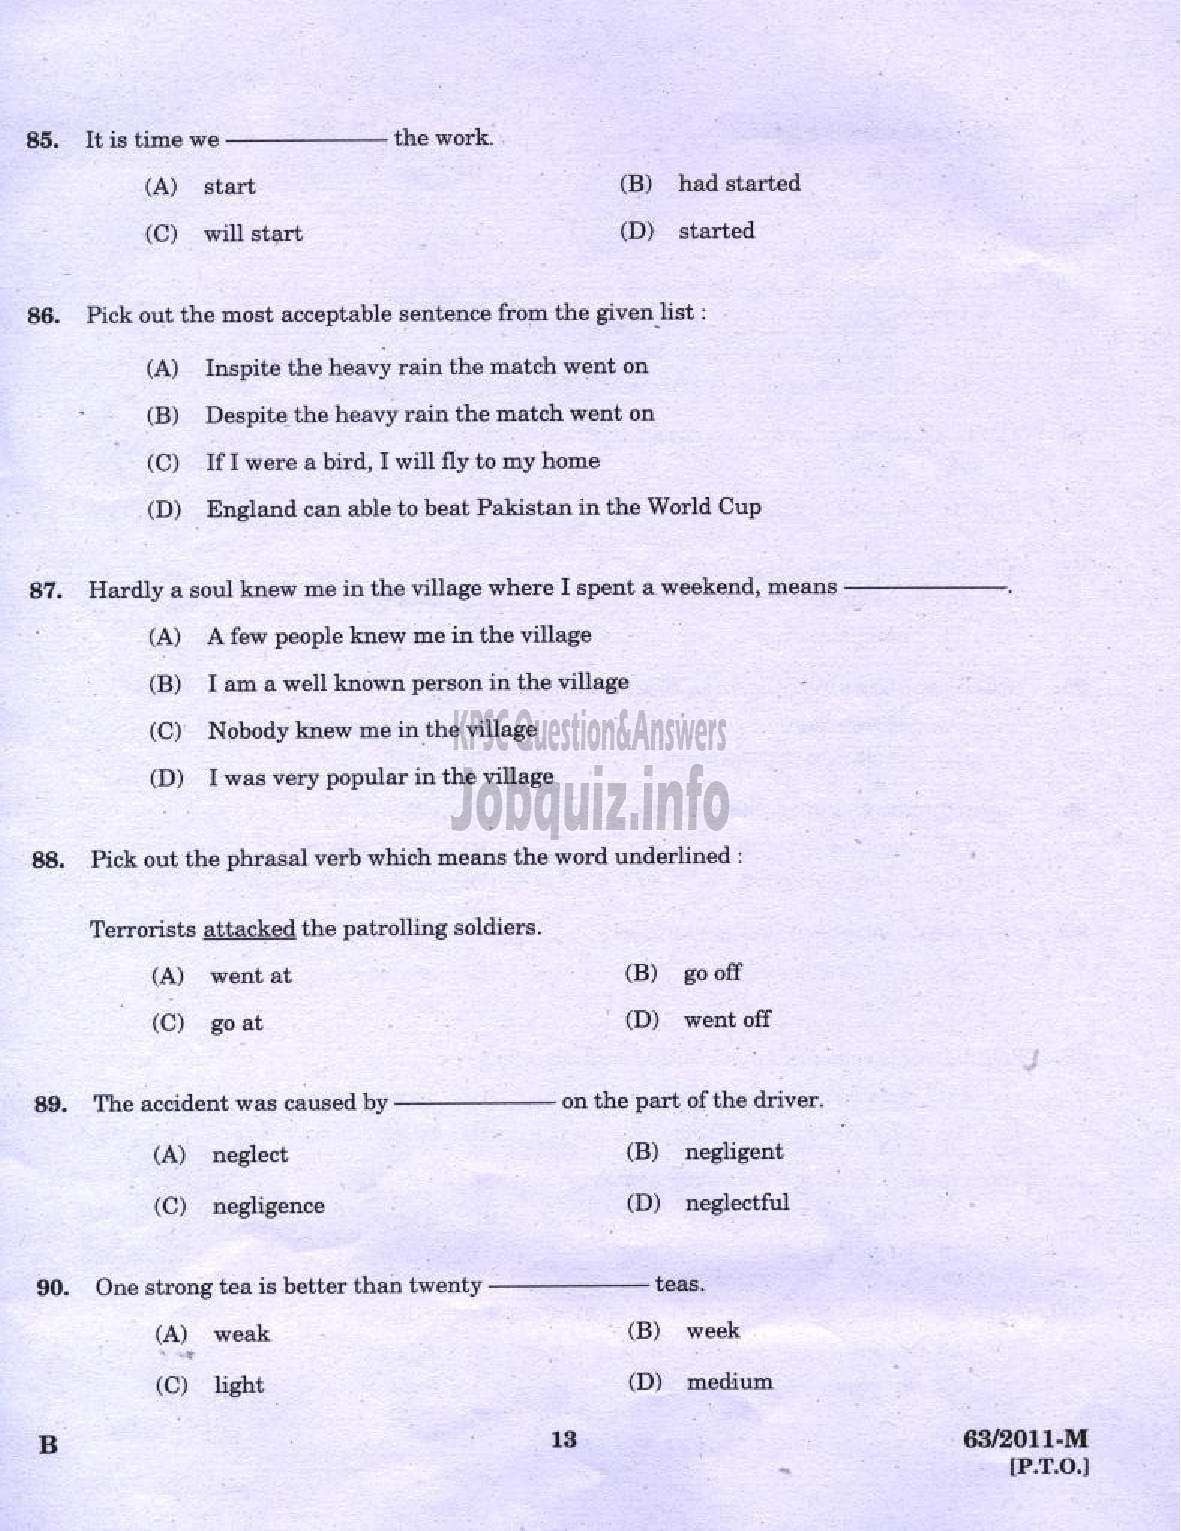 Kerala PSC Question Paper - LDC 2011 KOTTAYAM DISTRICT ( Malayalam ) -11